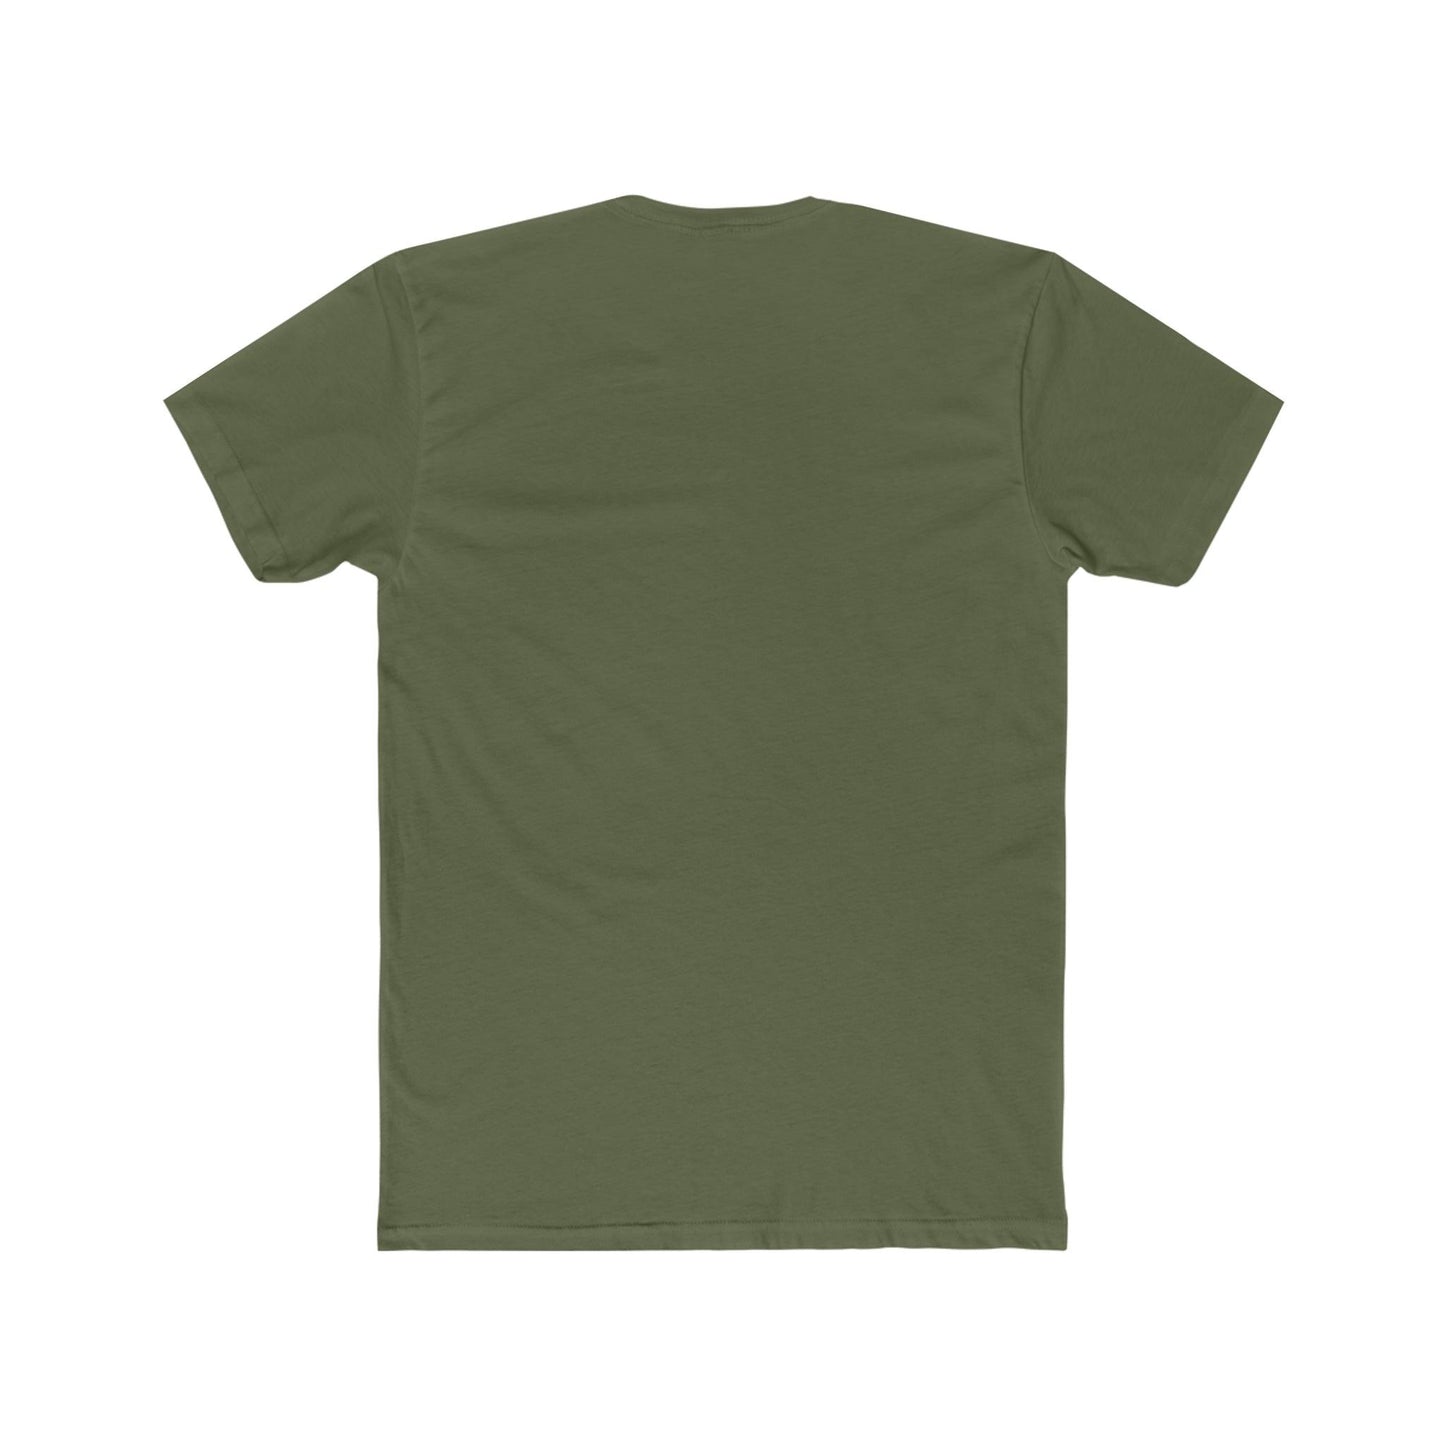 Southeastern Wilderness Alliance Hiking Nature T-shirt - Animal Instinctive